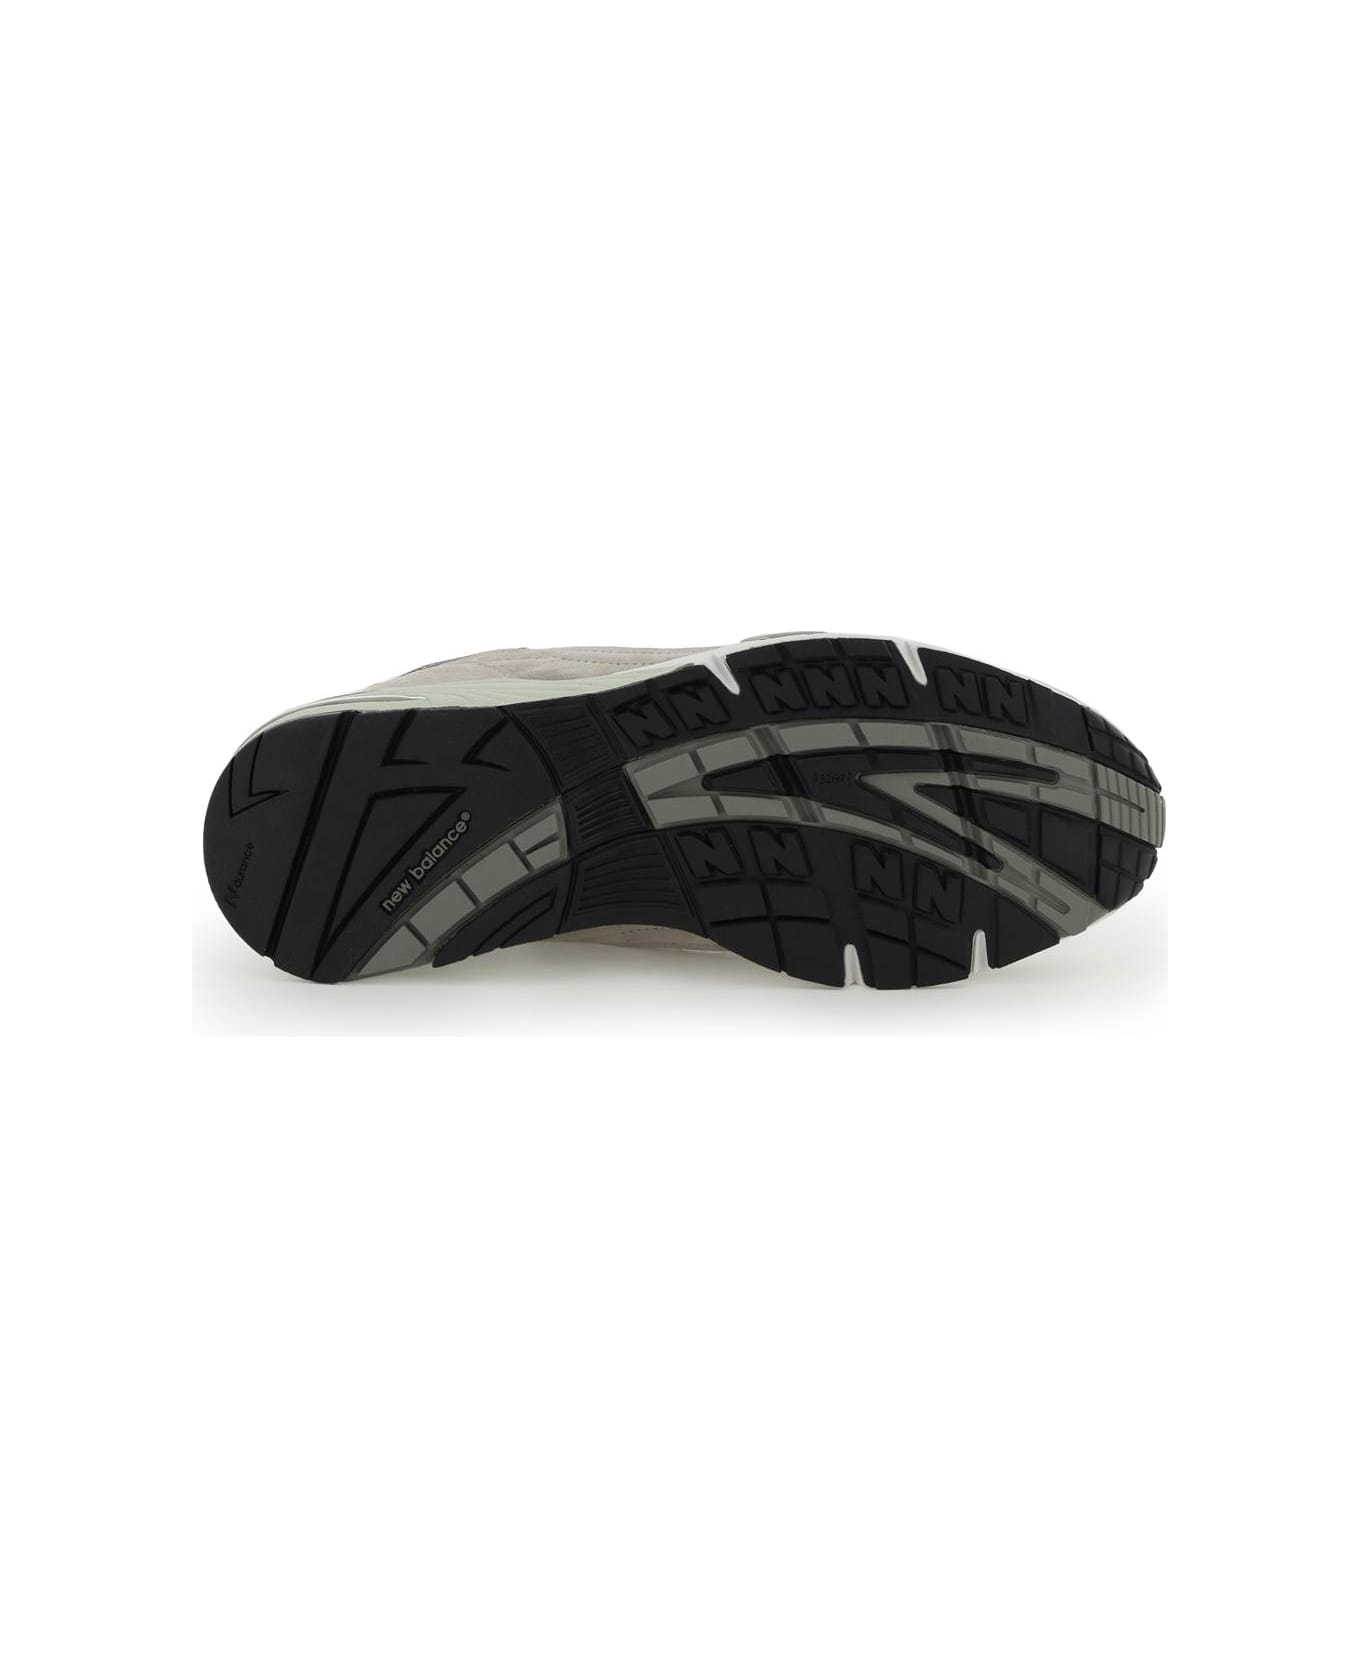 New Balance 991 Sneakers - Grey スニーカー